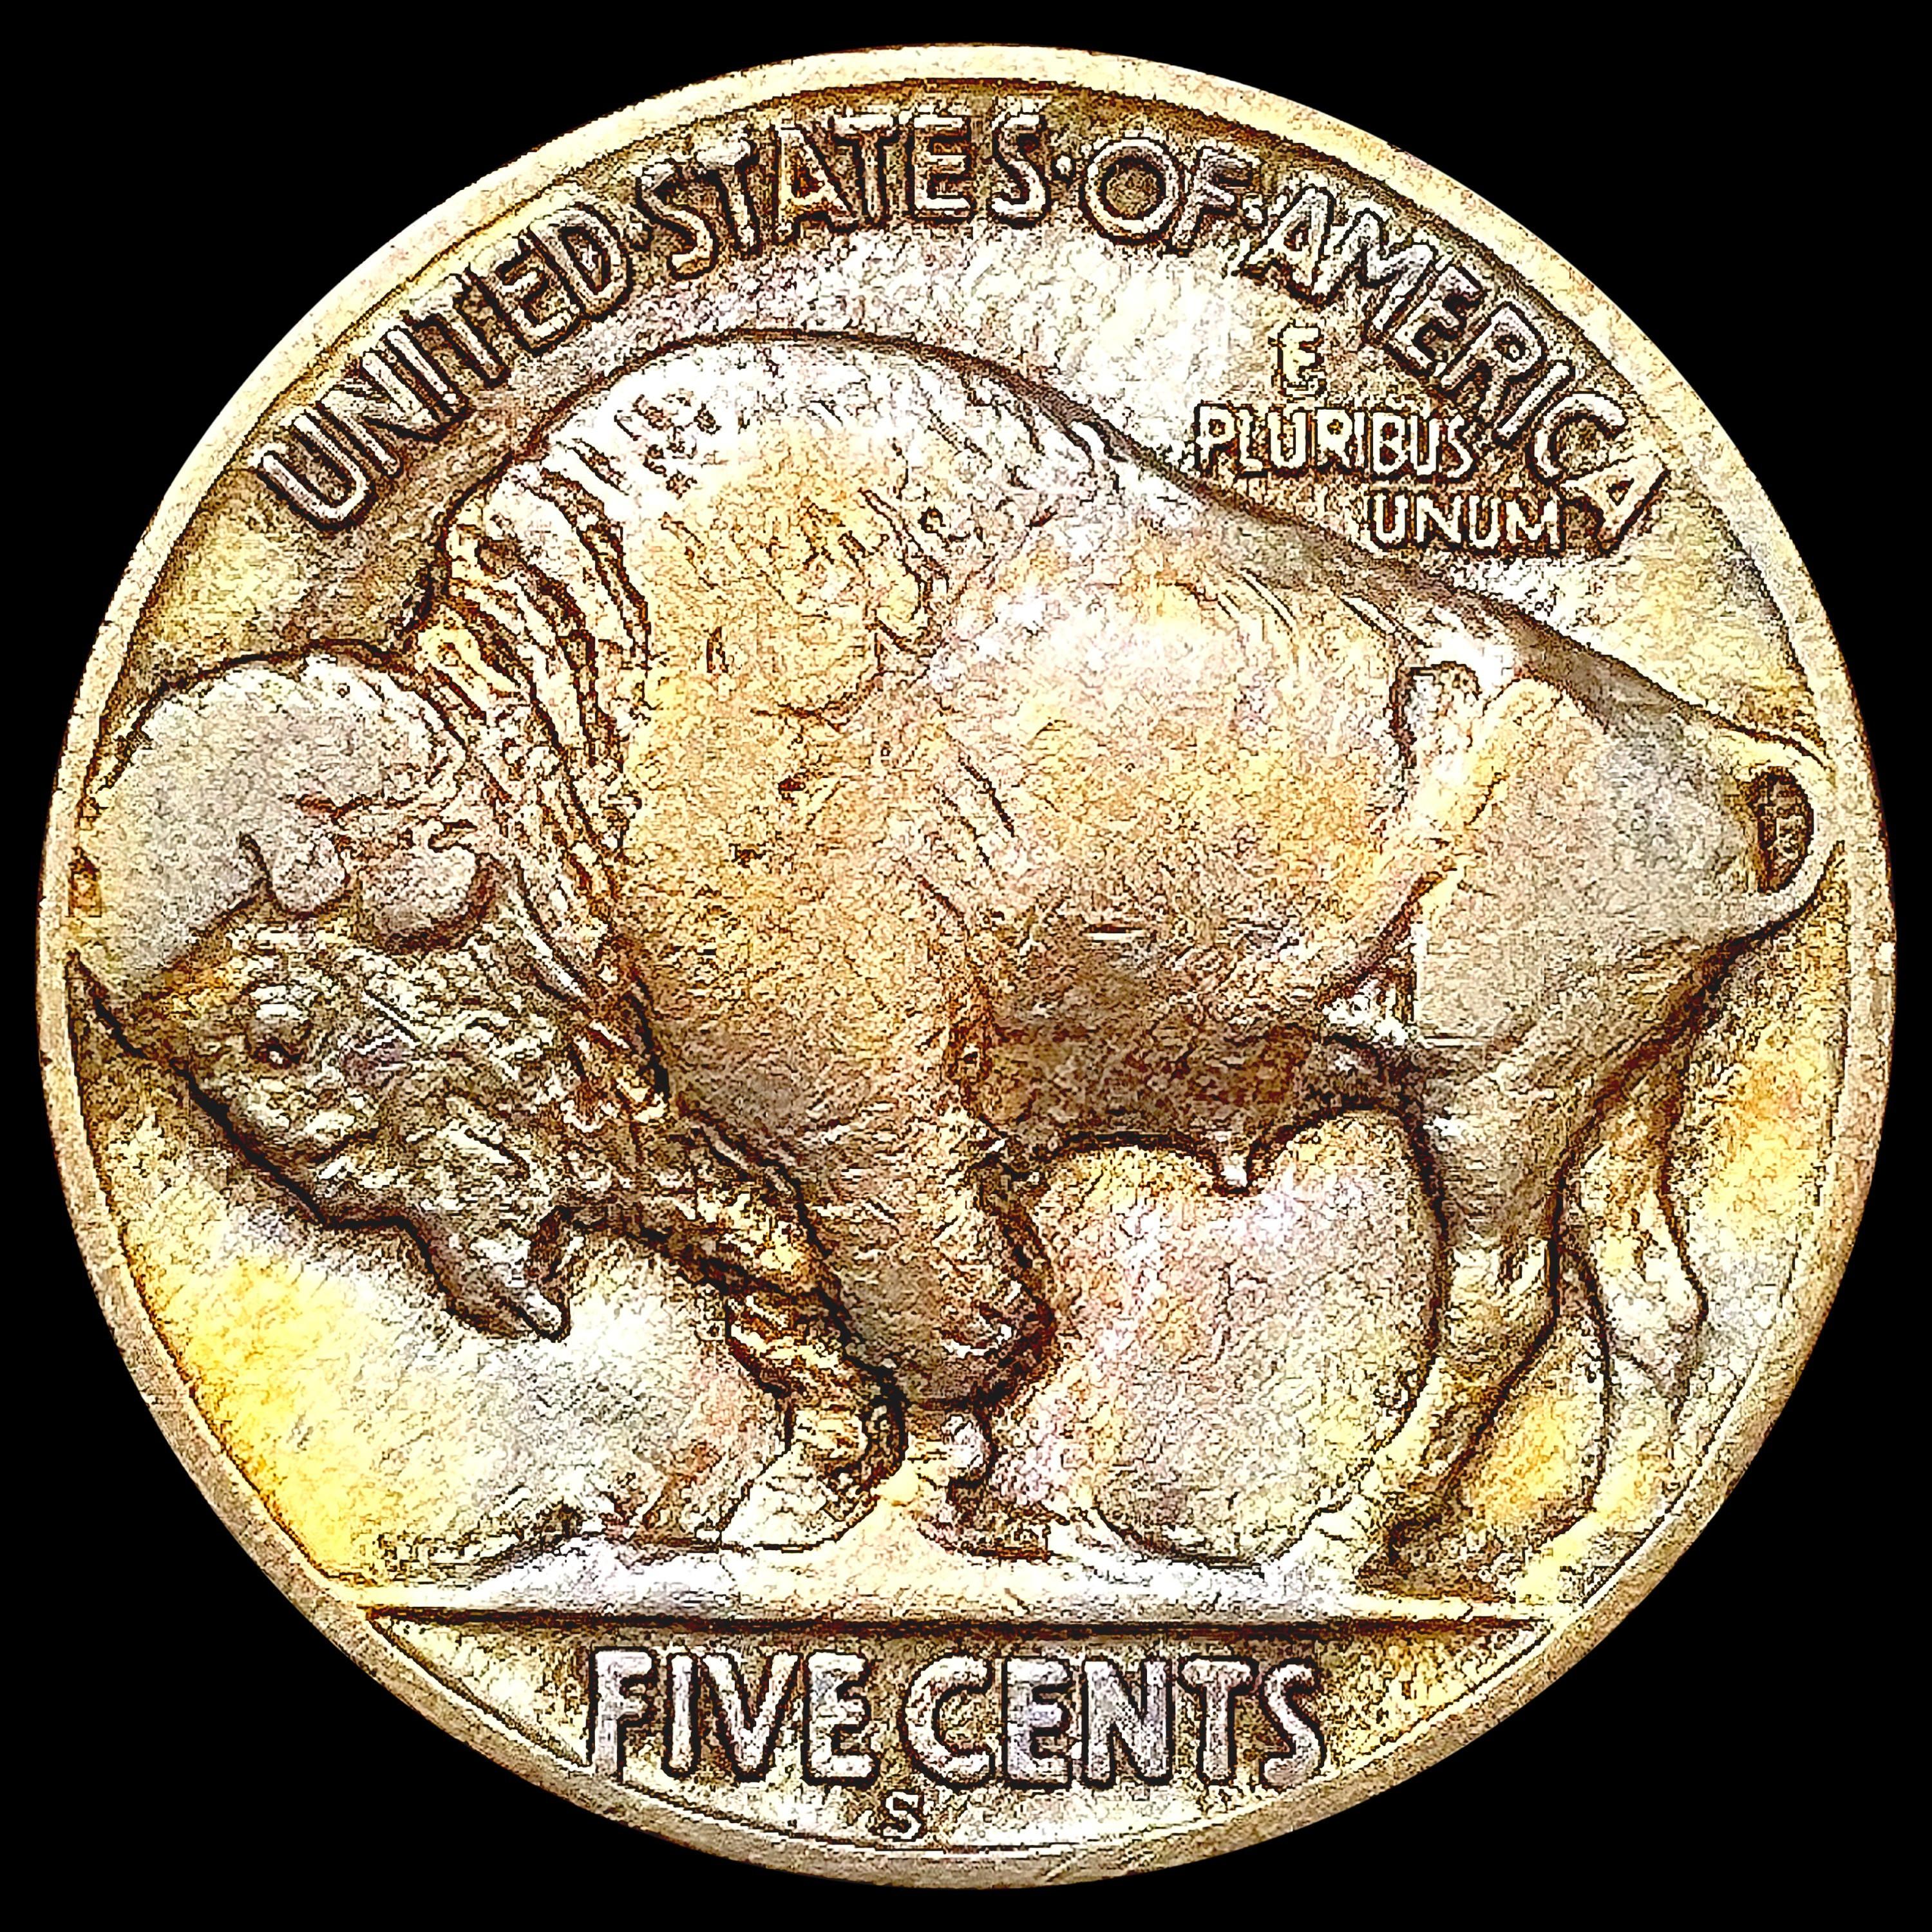 1920-S Buffalo Nickel NEARLY UNCIRCULATED